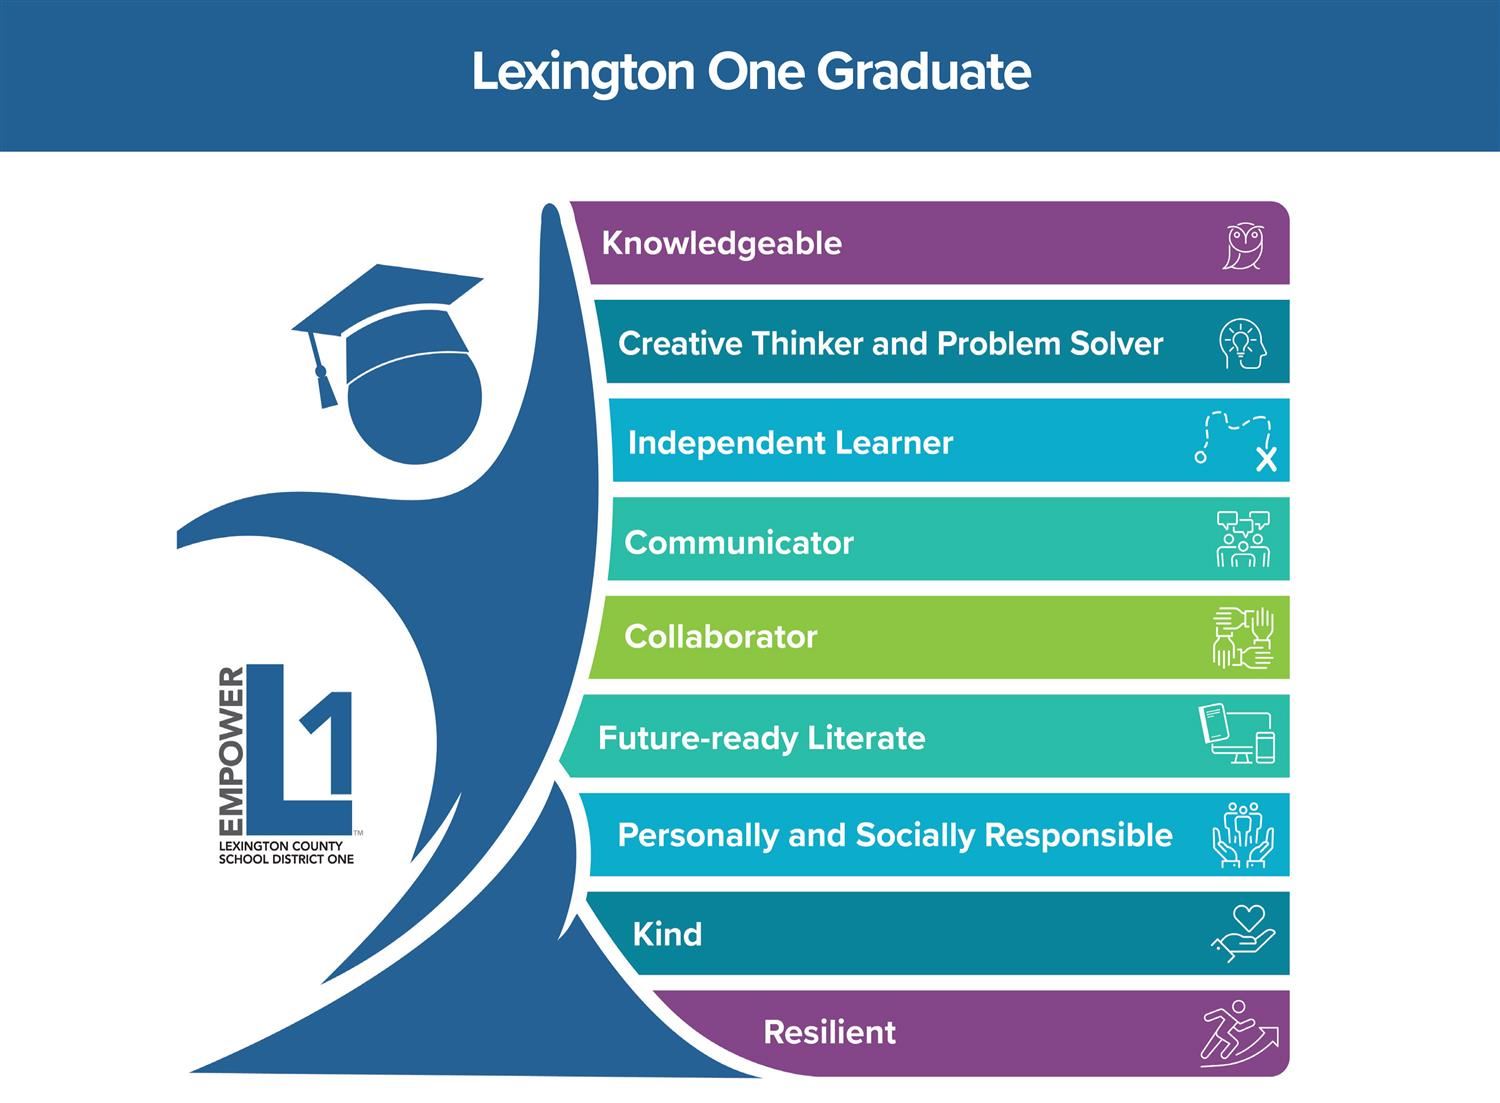 Profile of the Lexington One graphic